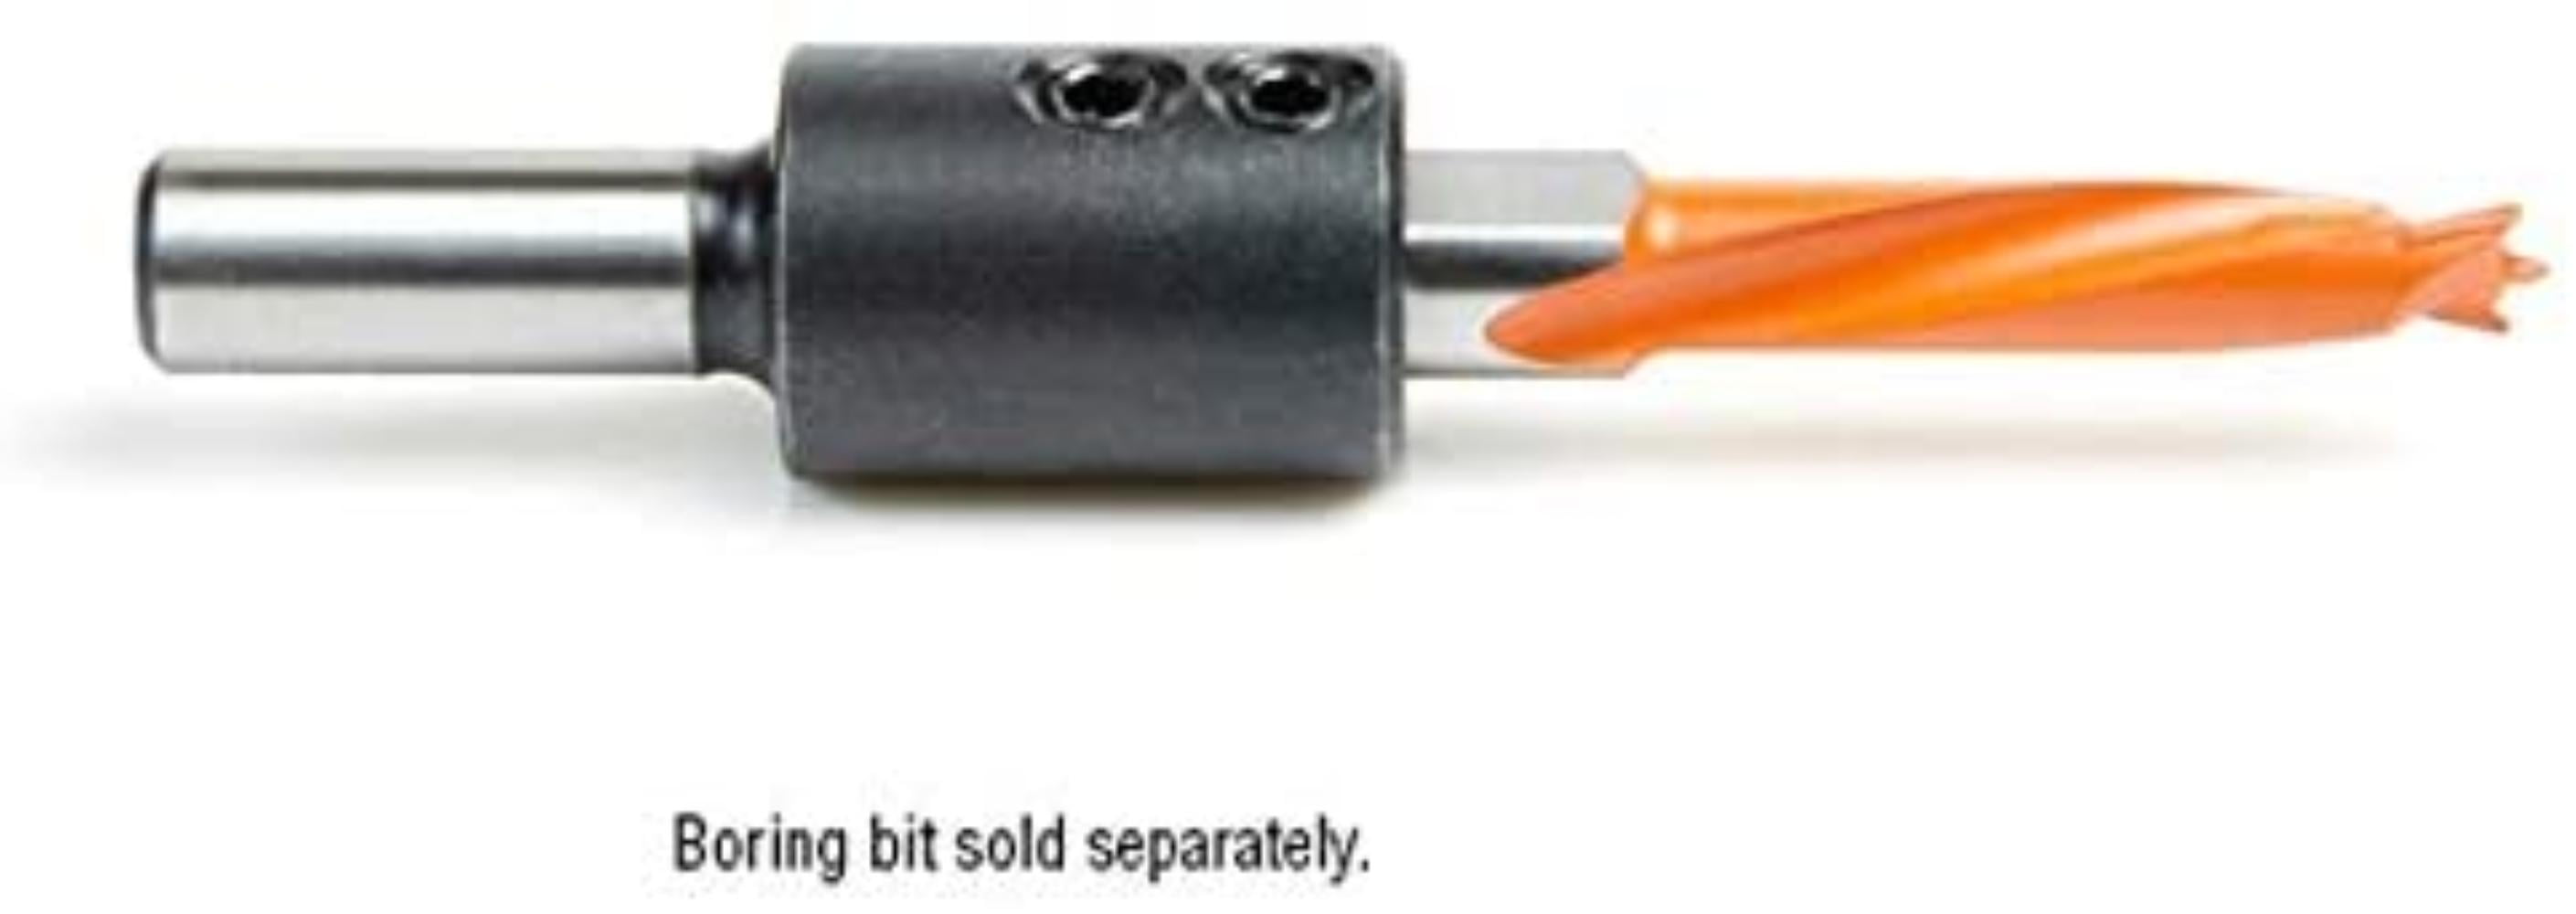 47643 10mm Shank Dowel Drill/Boring Bit Adapter for CNC Standard Collet/Tool Amana Tool 